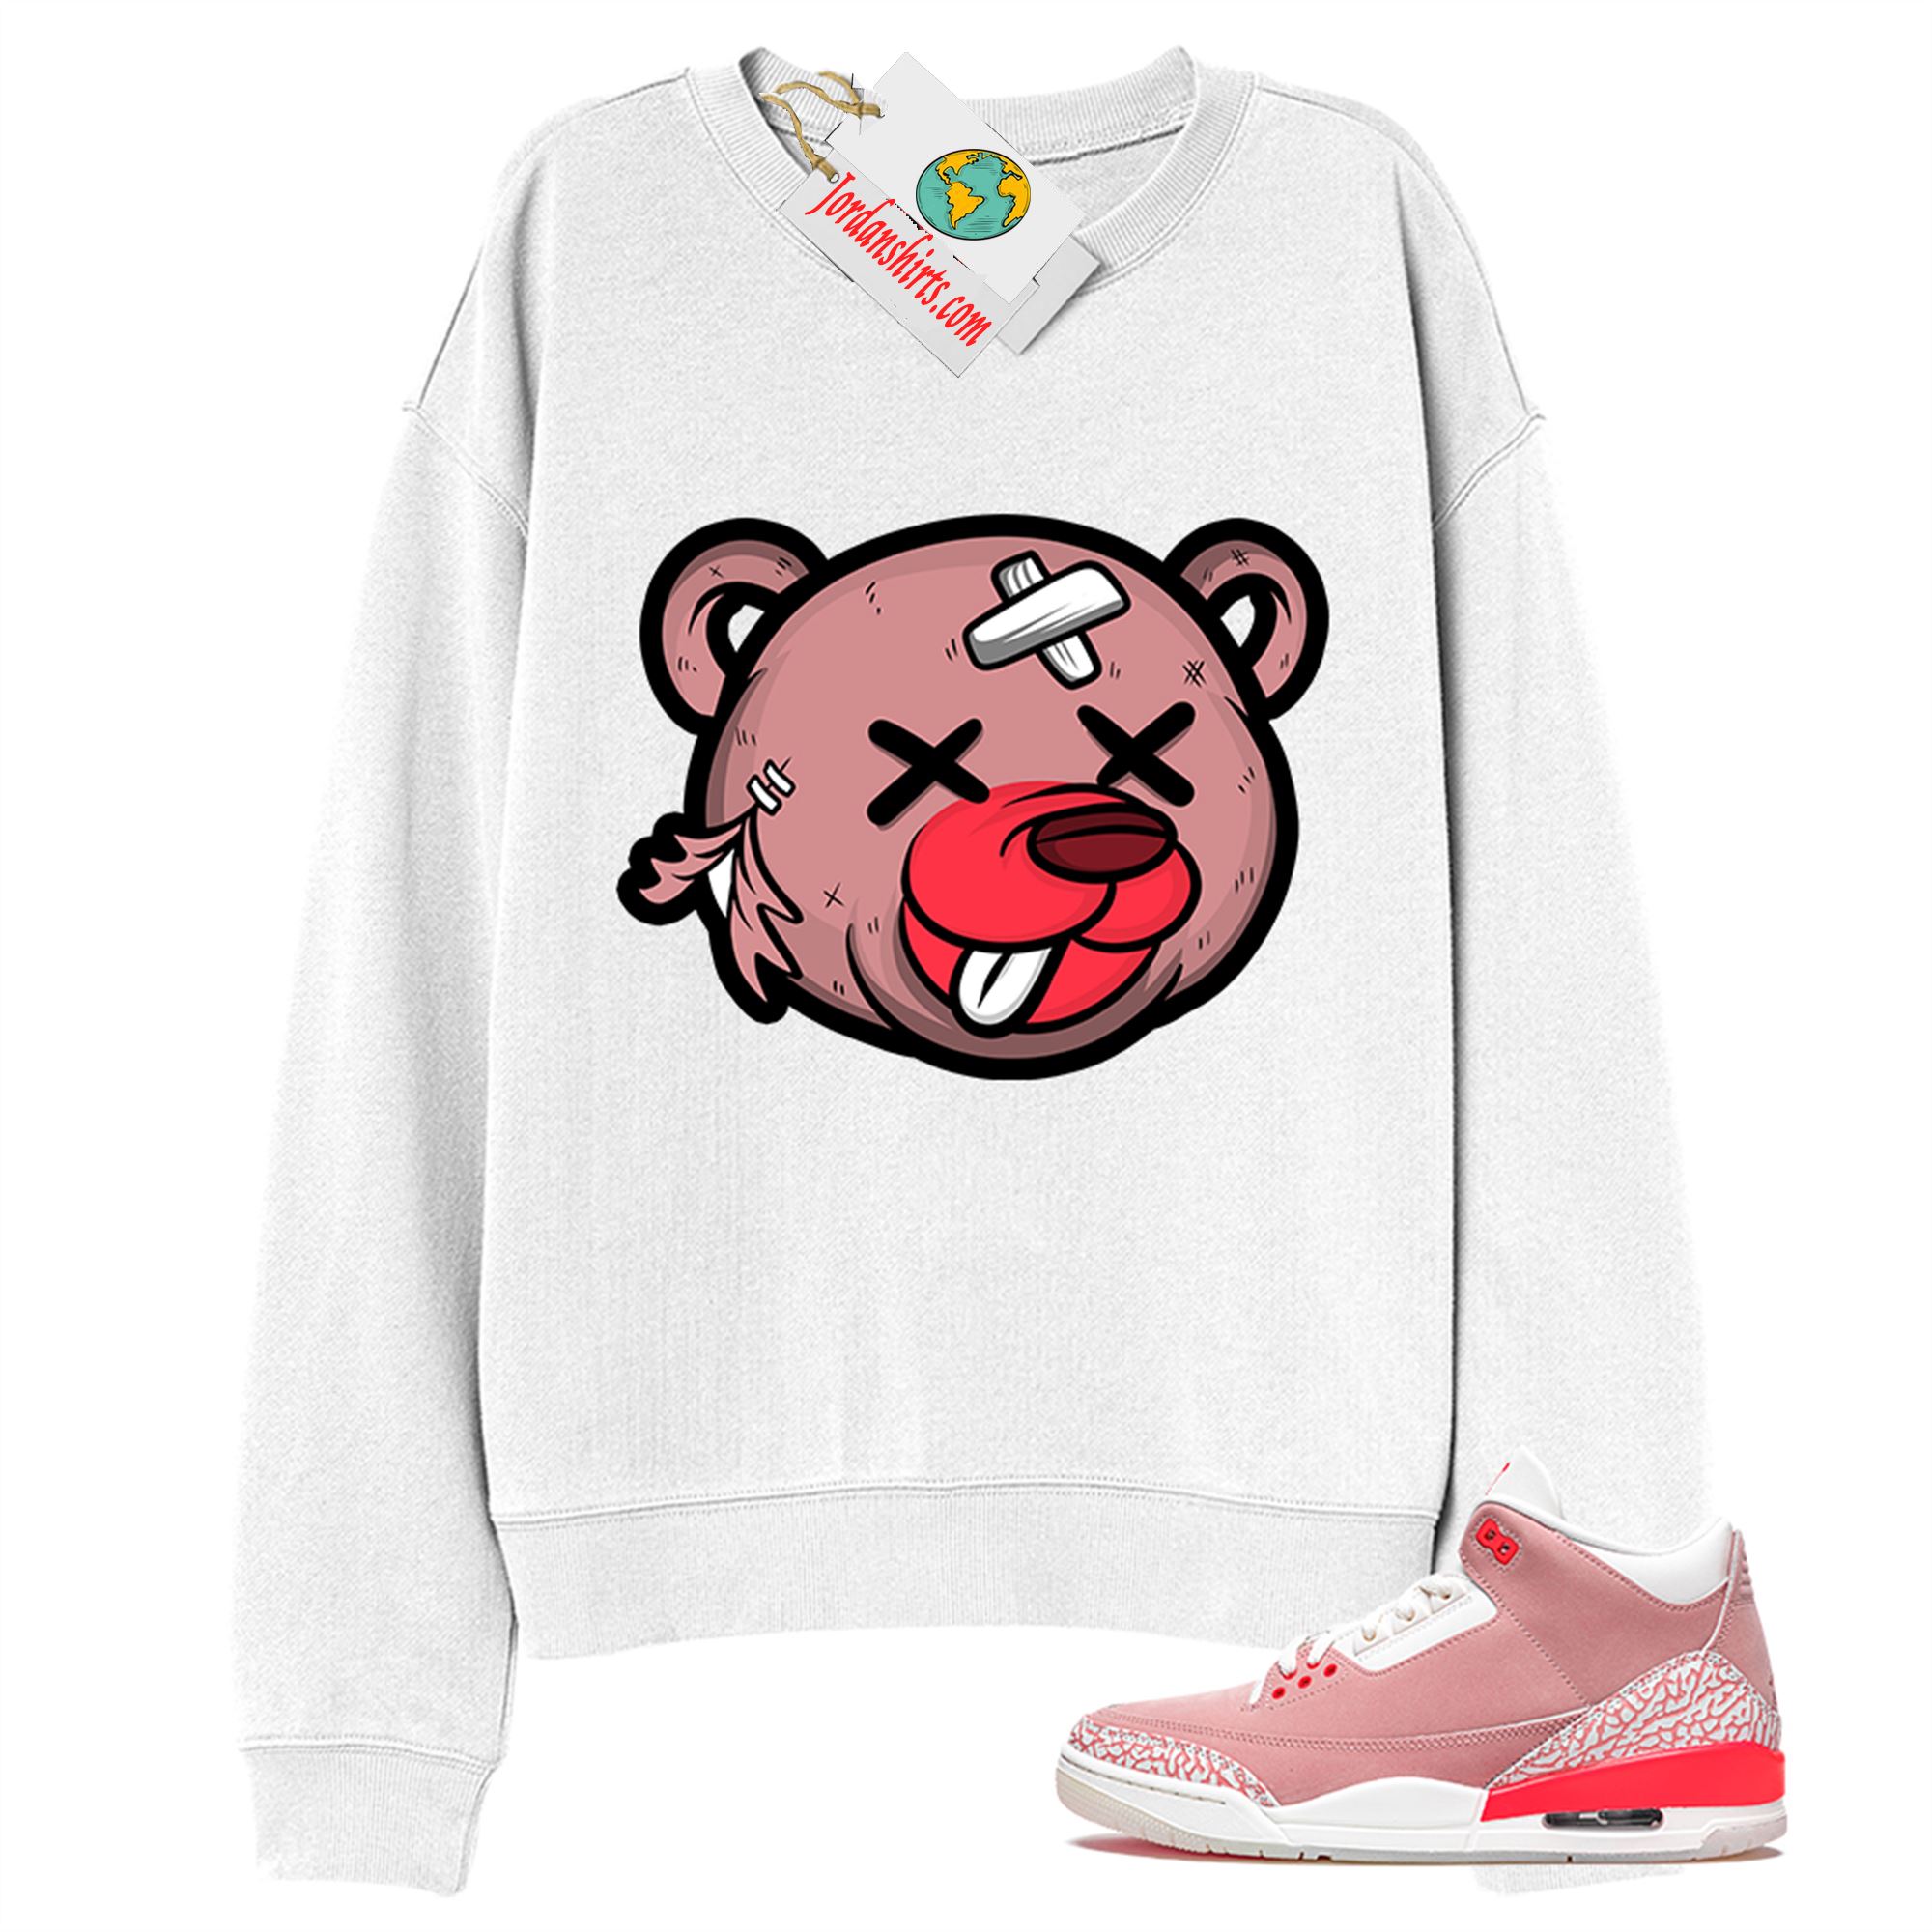 Jordan 3 Sweatshirt, Teddy Bear Head White Sweatshirt Air Jordan 3 Rust Pink 3s Full Size Up To 5xl